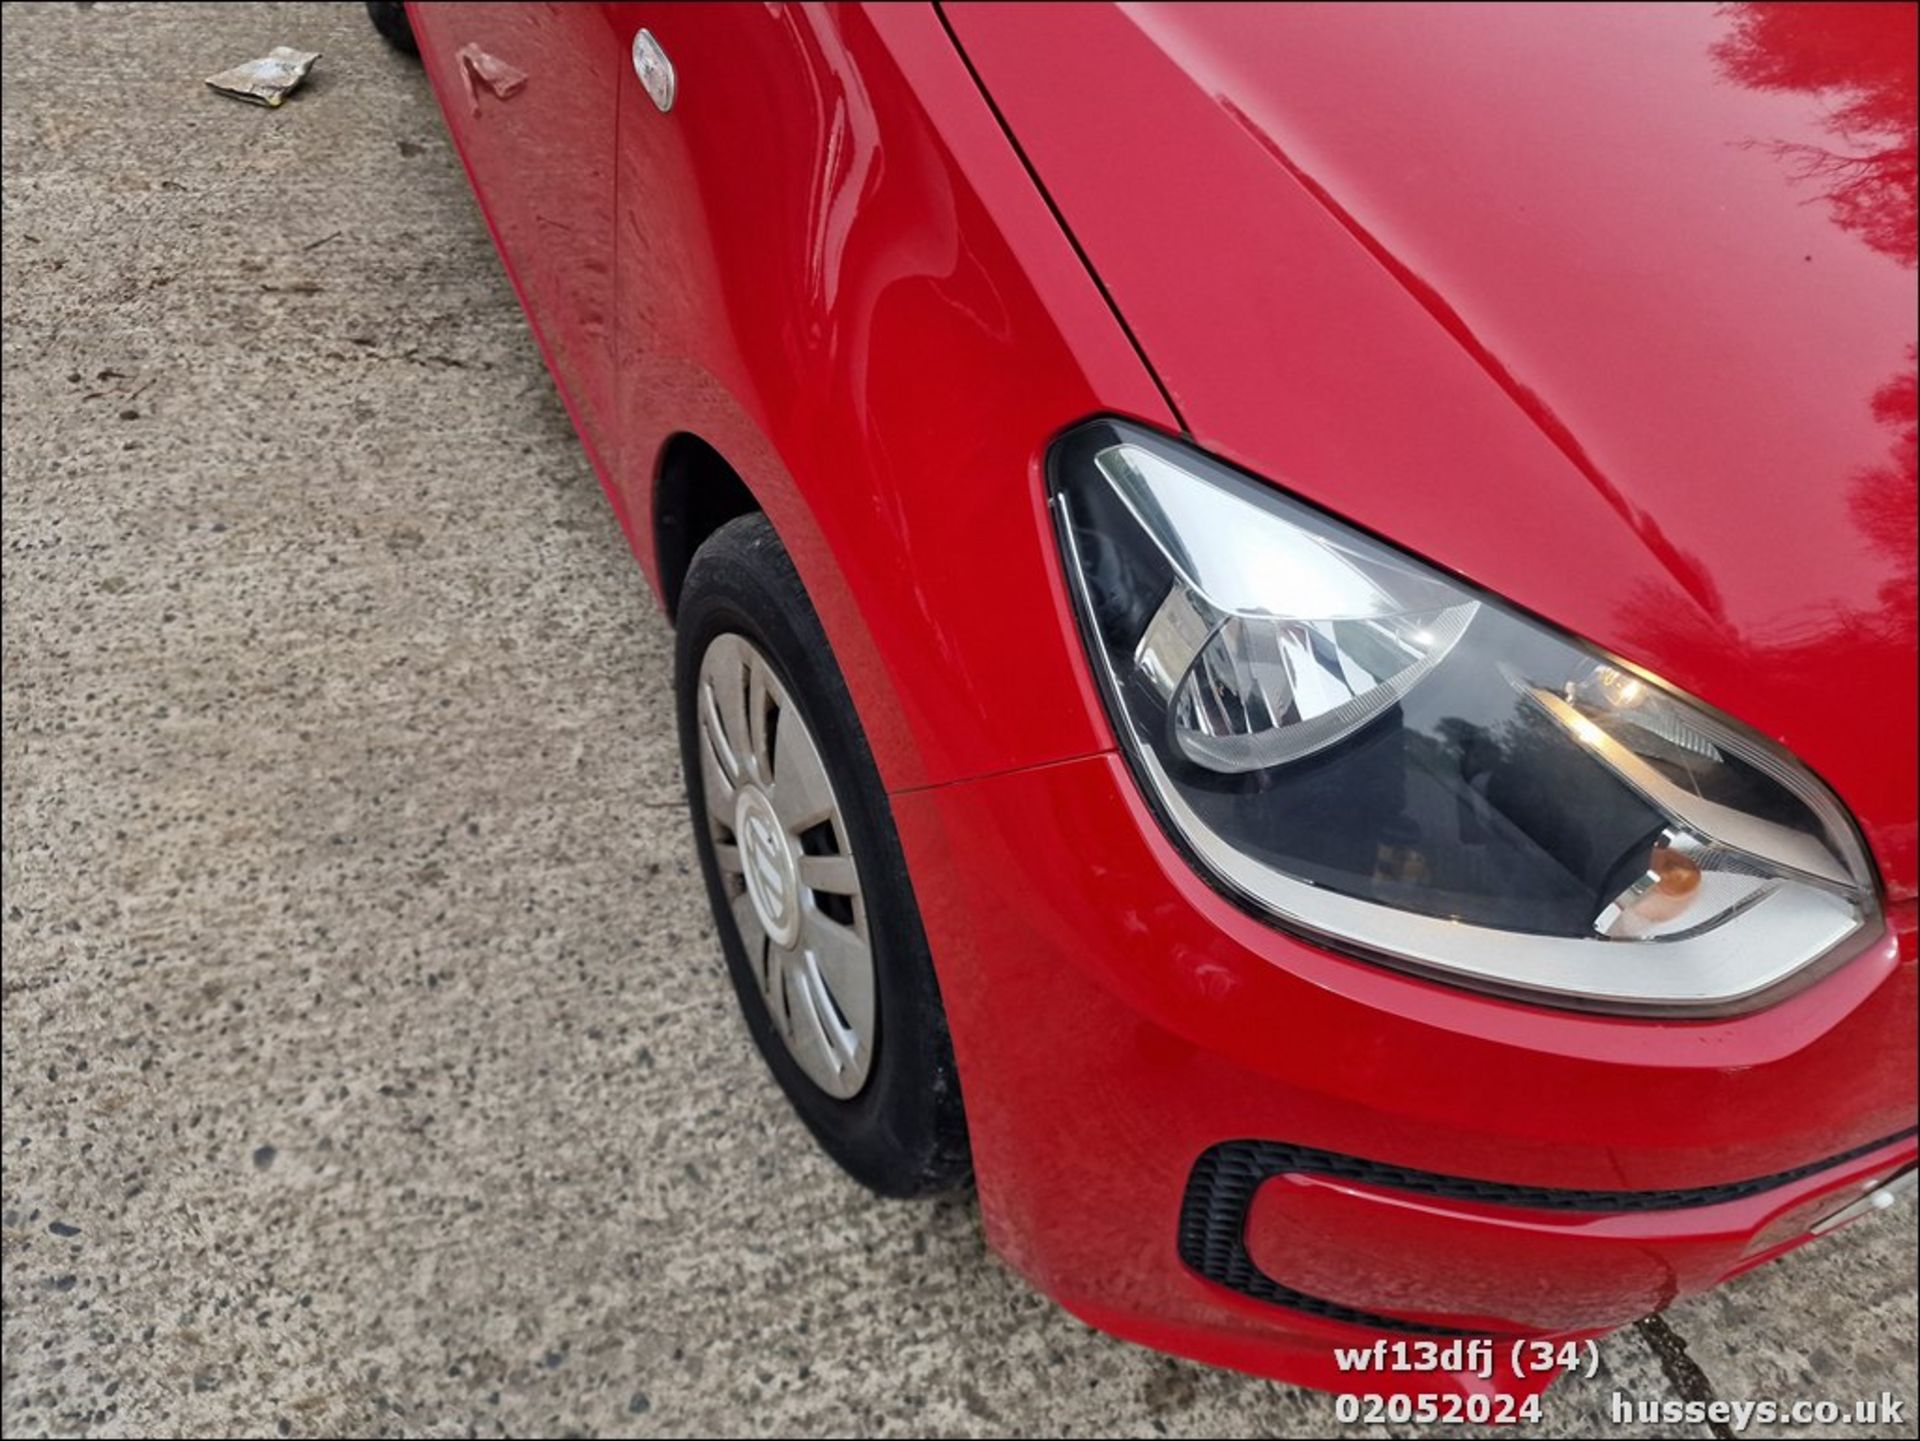 13/13 VOLKSWAGEN MOVE UP AUTO - 999cc 5dr Hatchback (Red, 17k) - Image 35 of 46